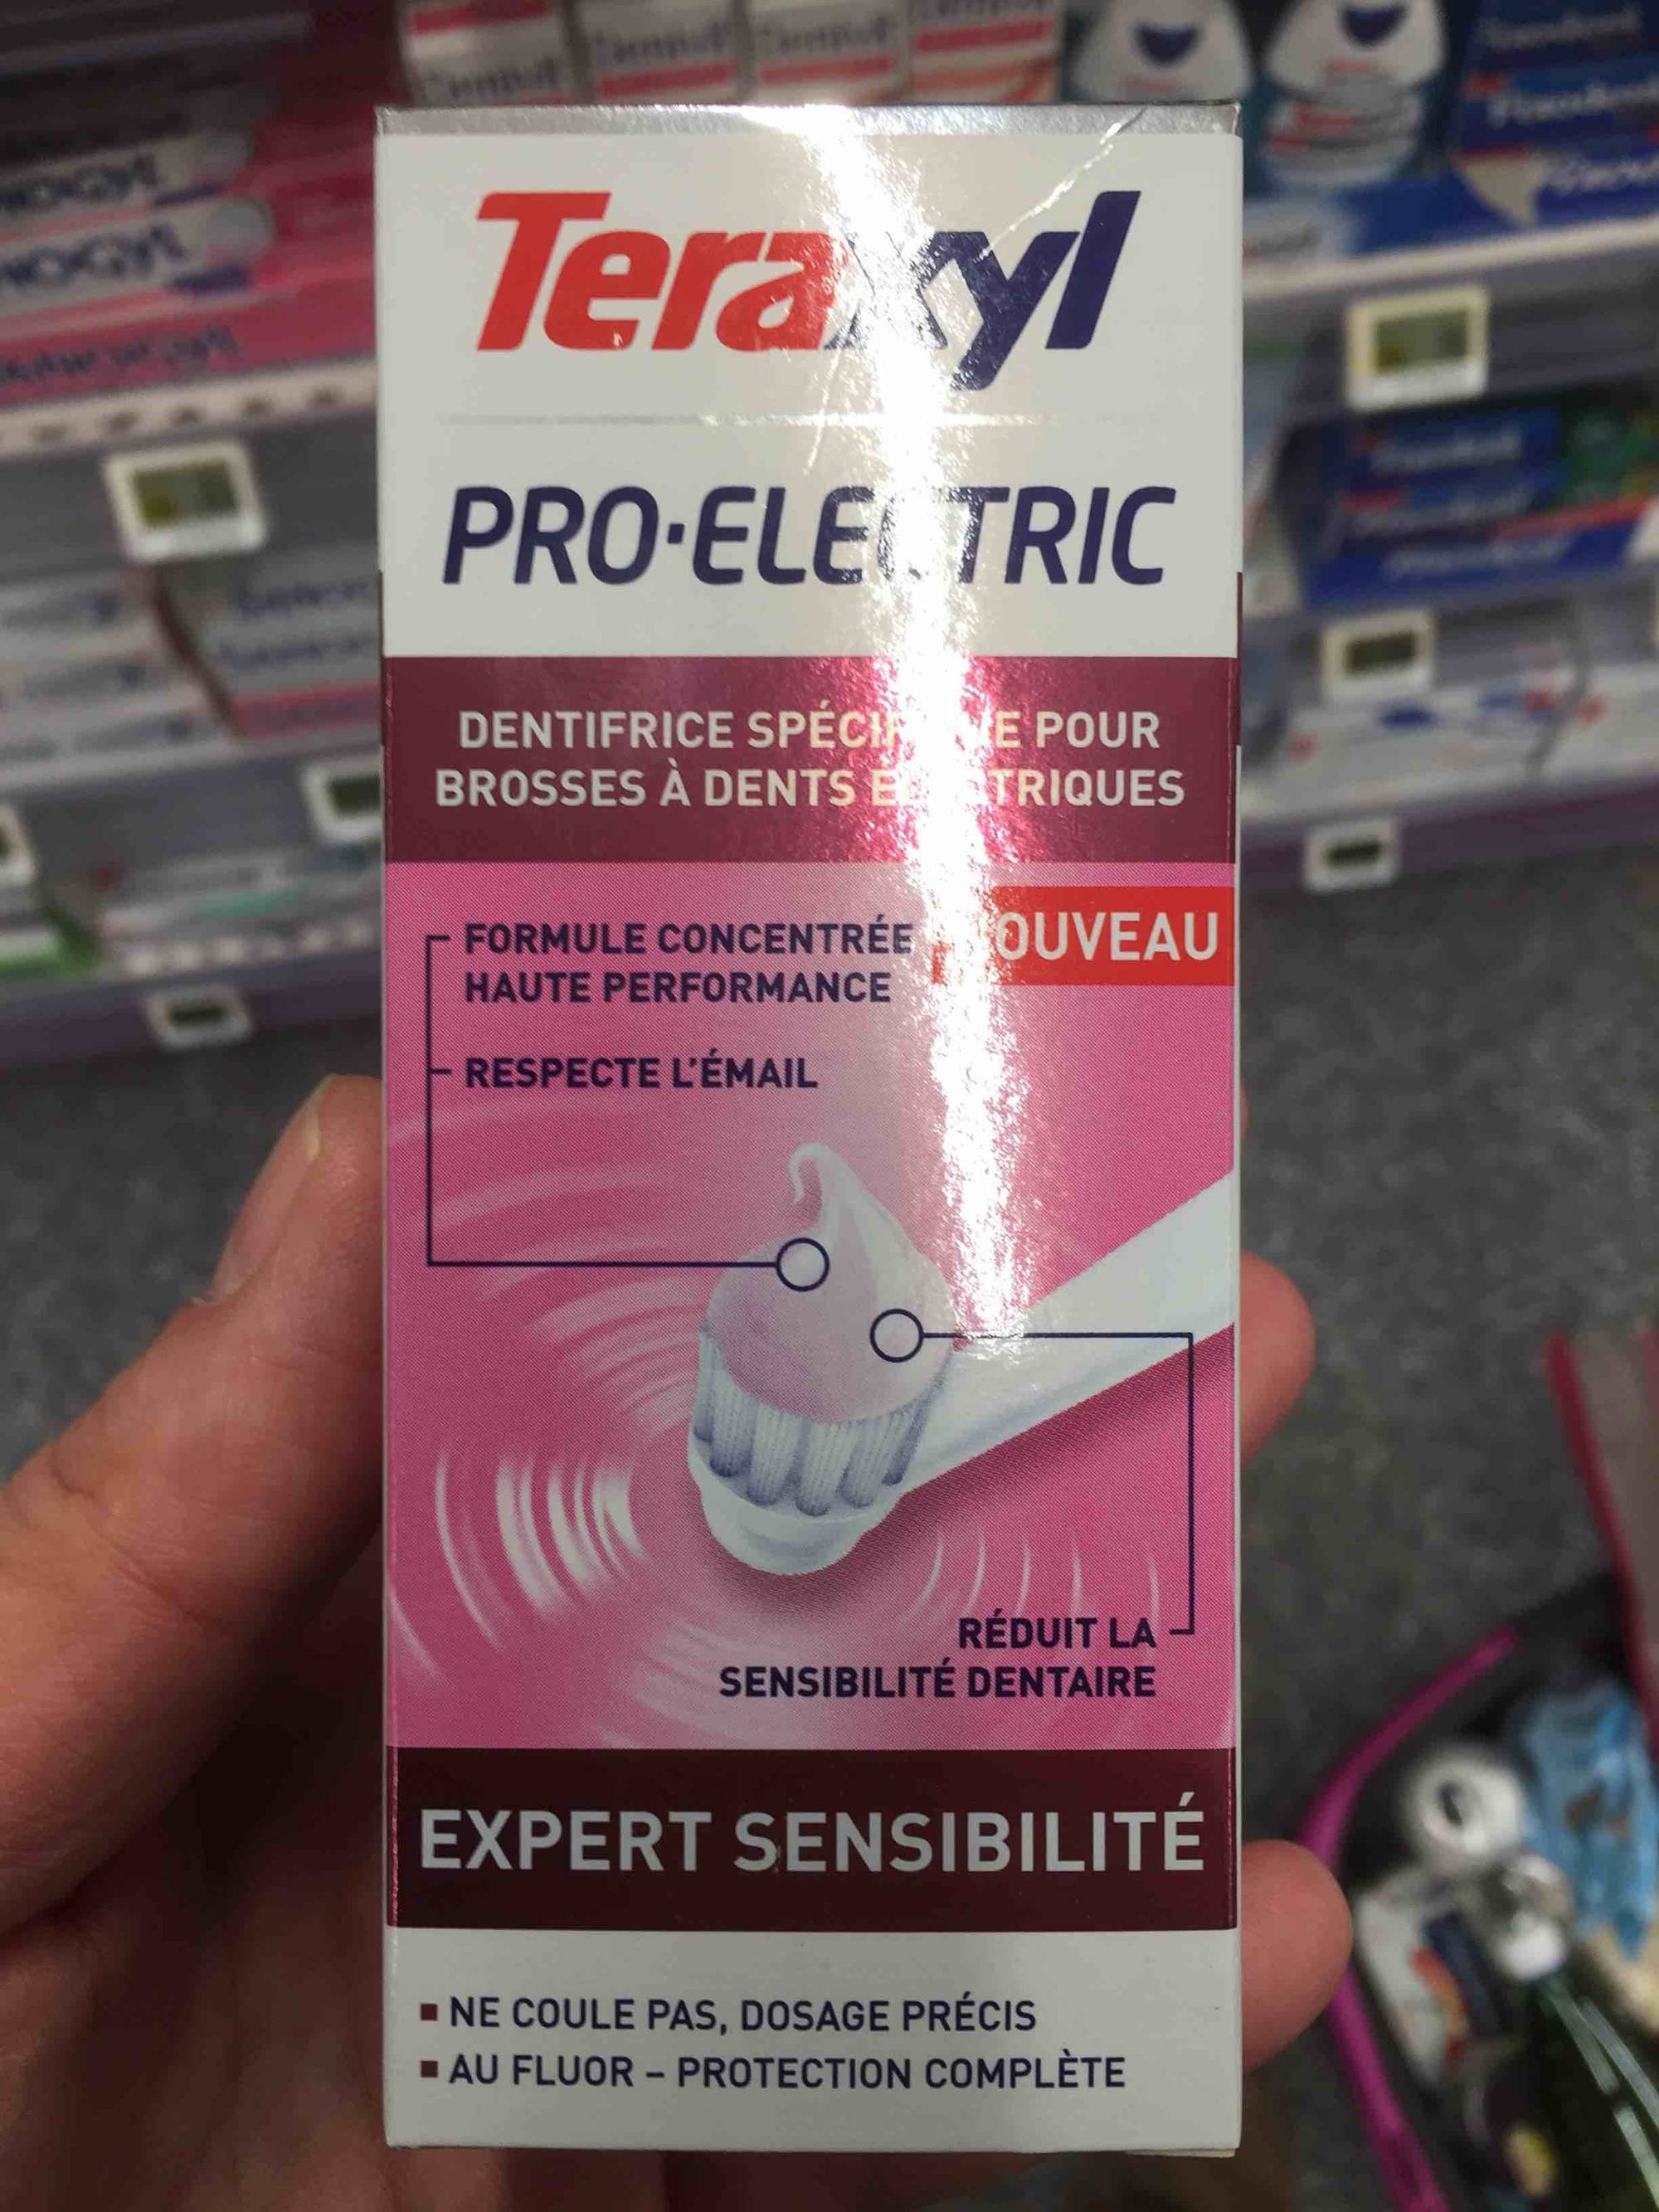 TERAXYL - Pro-electric expert sensibilité - Dentifrice